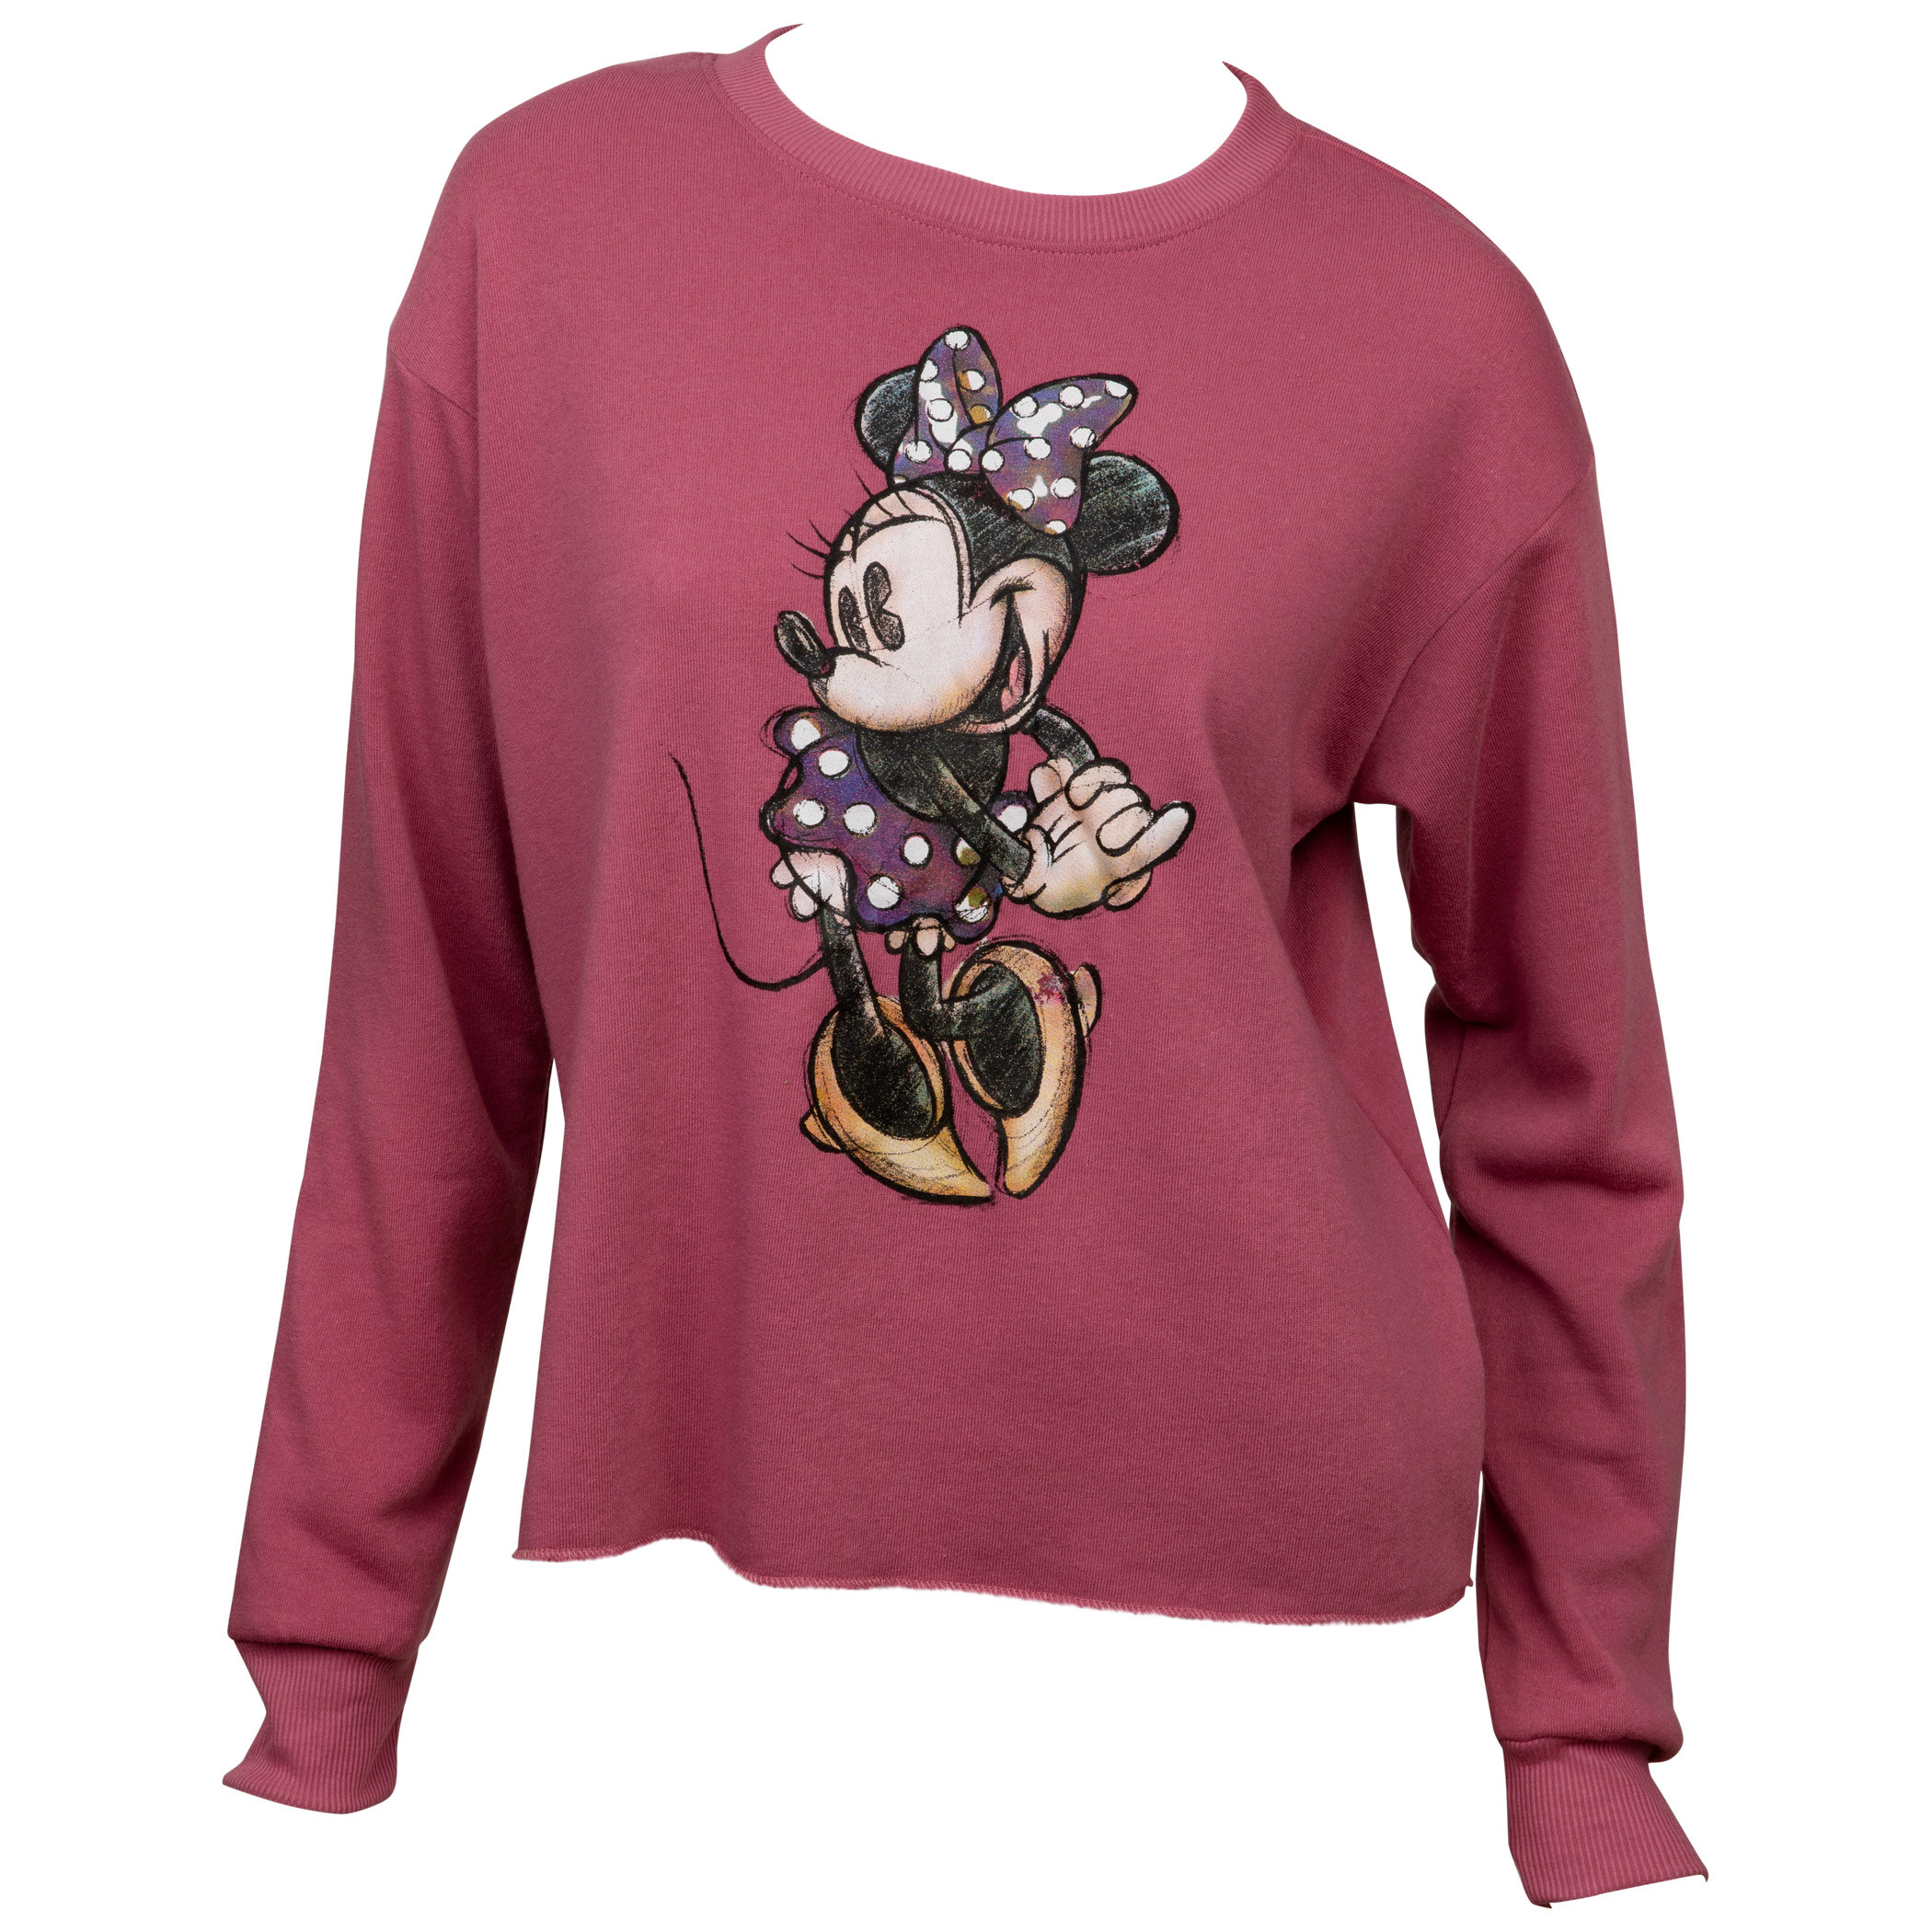 Disney's Minnie Mouse Standing Women's Pullover Sweatshirt